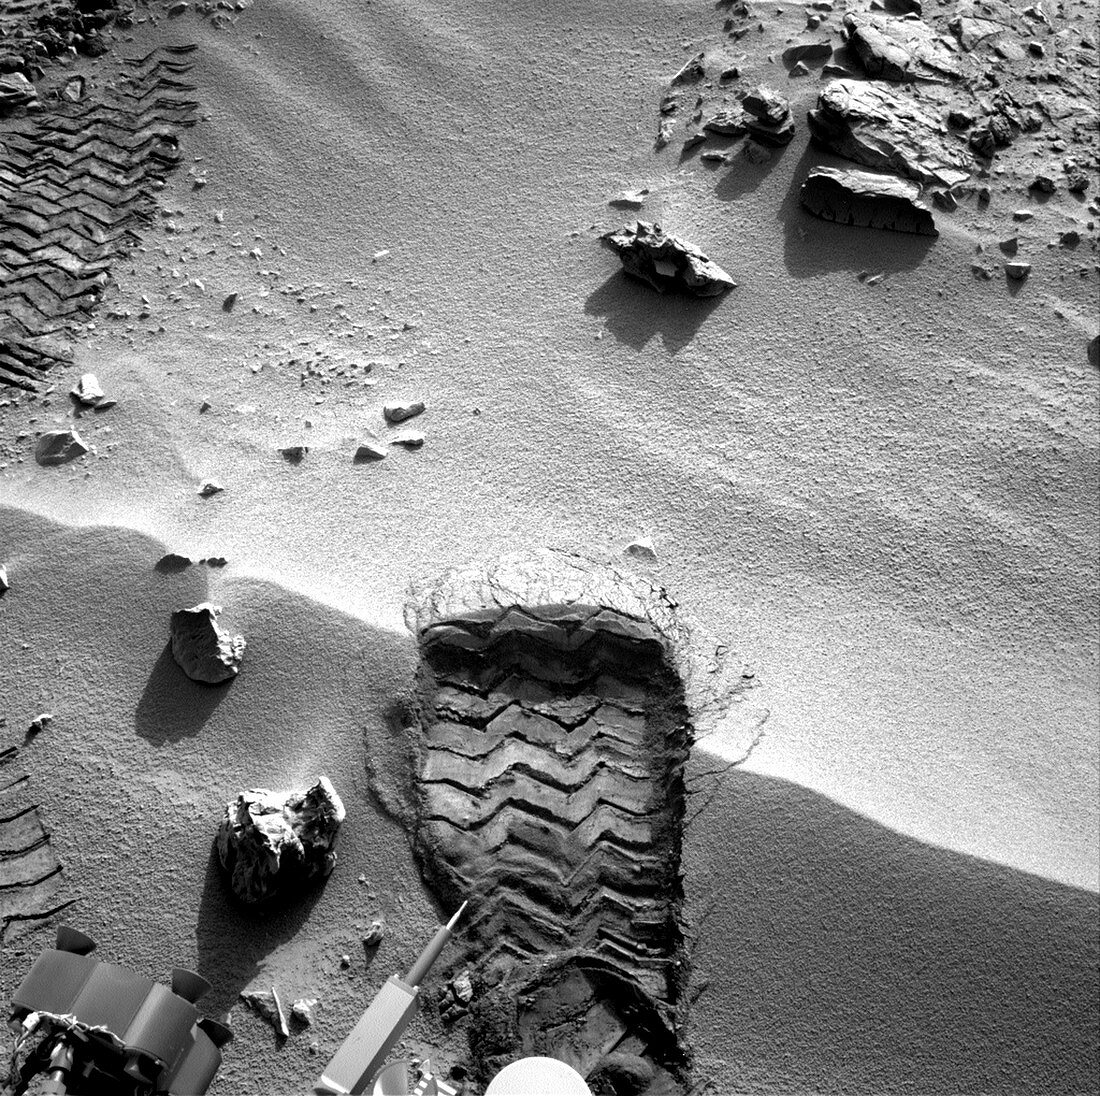 Rocknest site,Mars,Curiosity image